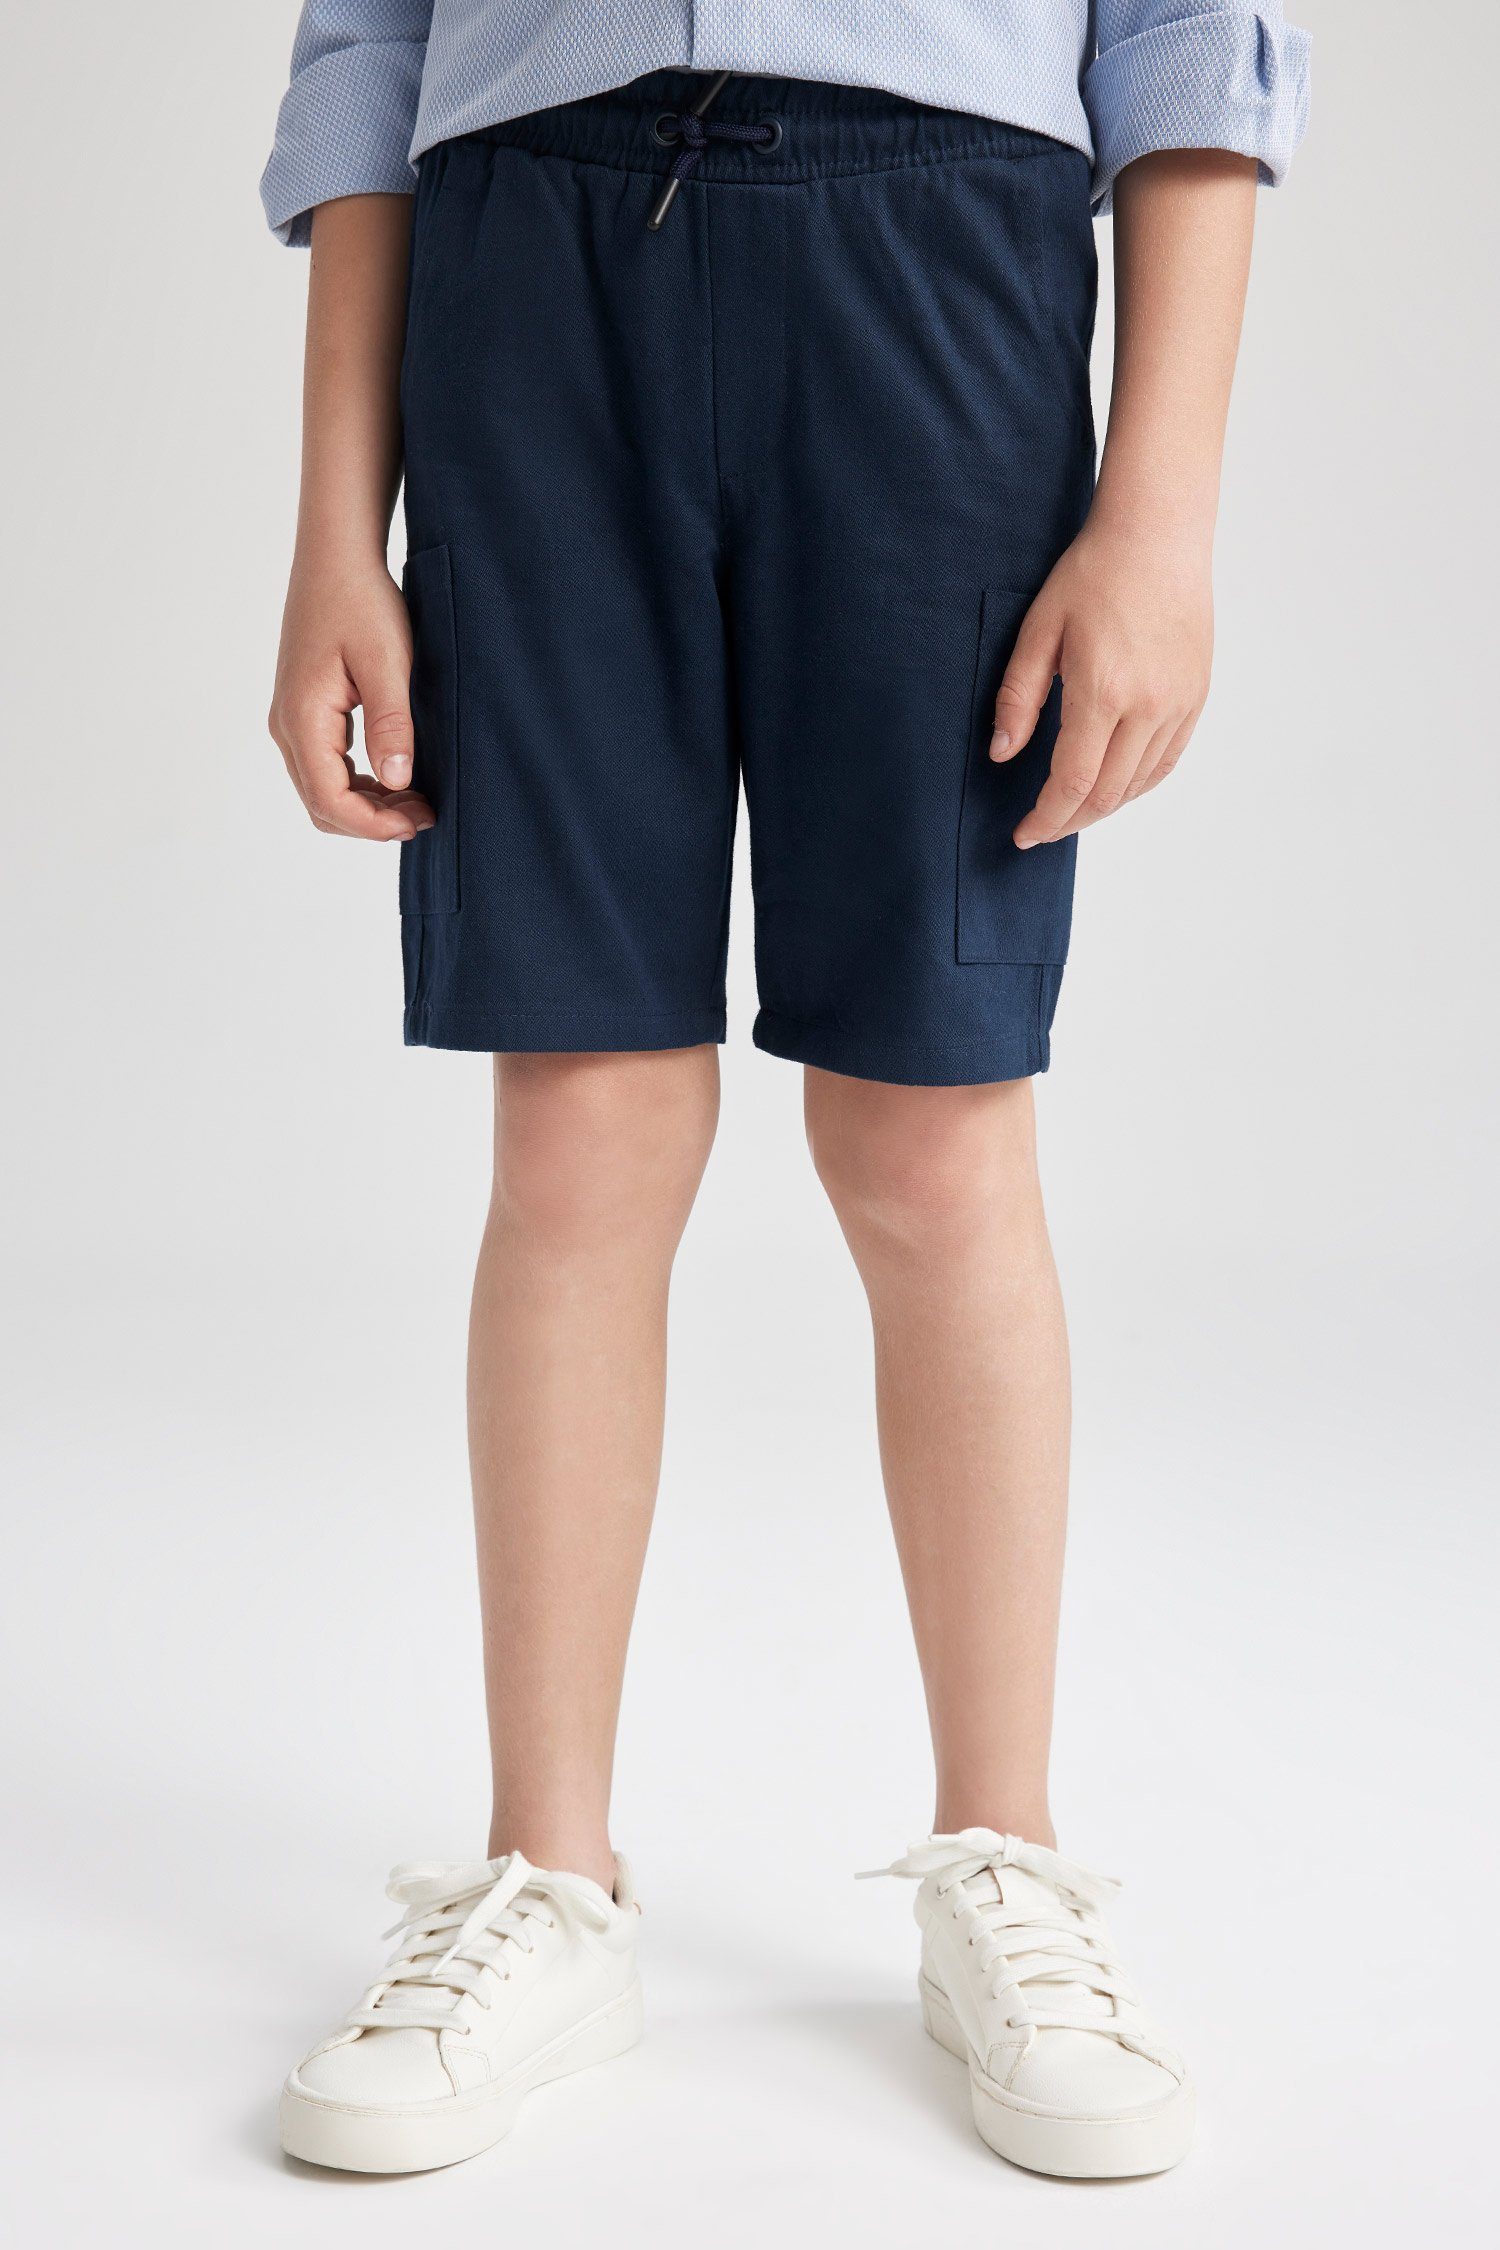 DeFacto Marineblau FIT Shorts Jungen REGULAR Shorts